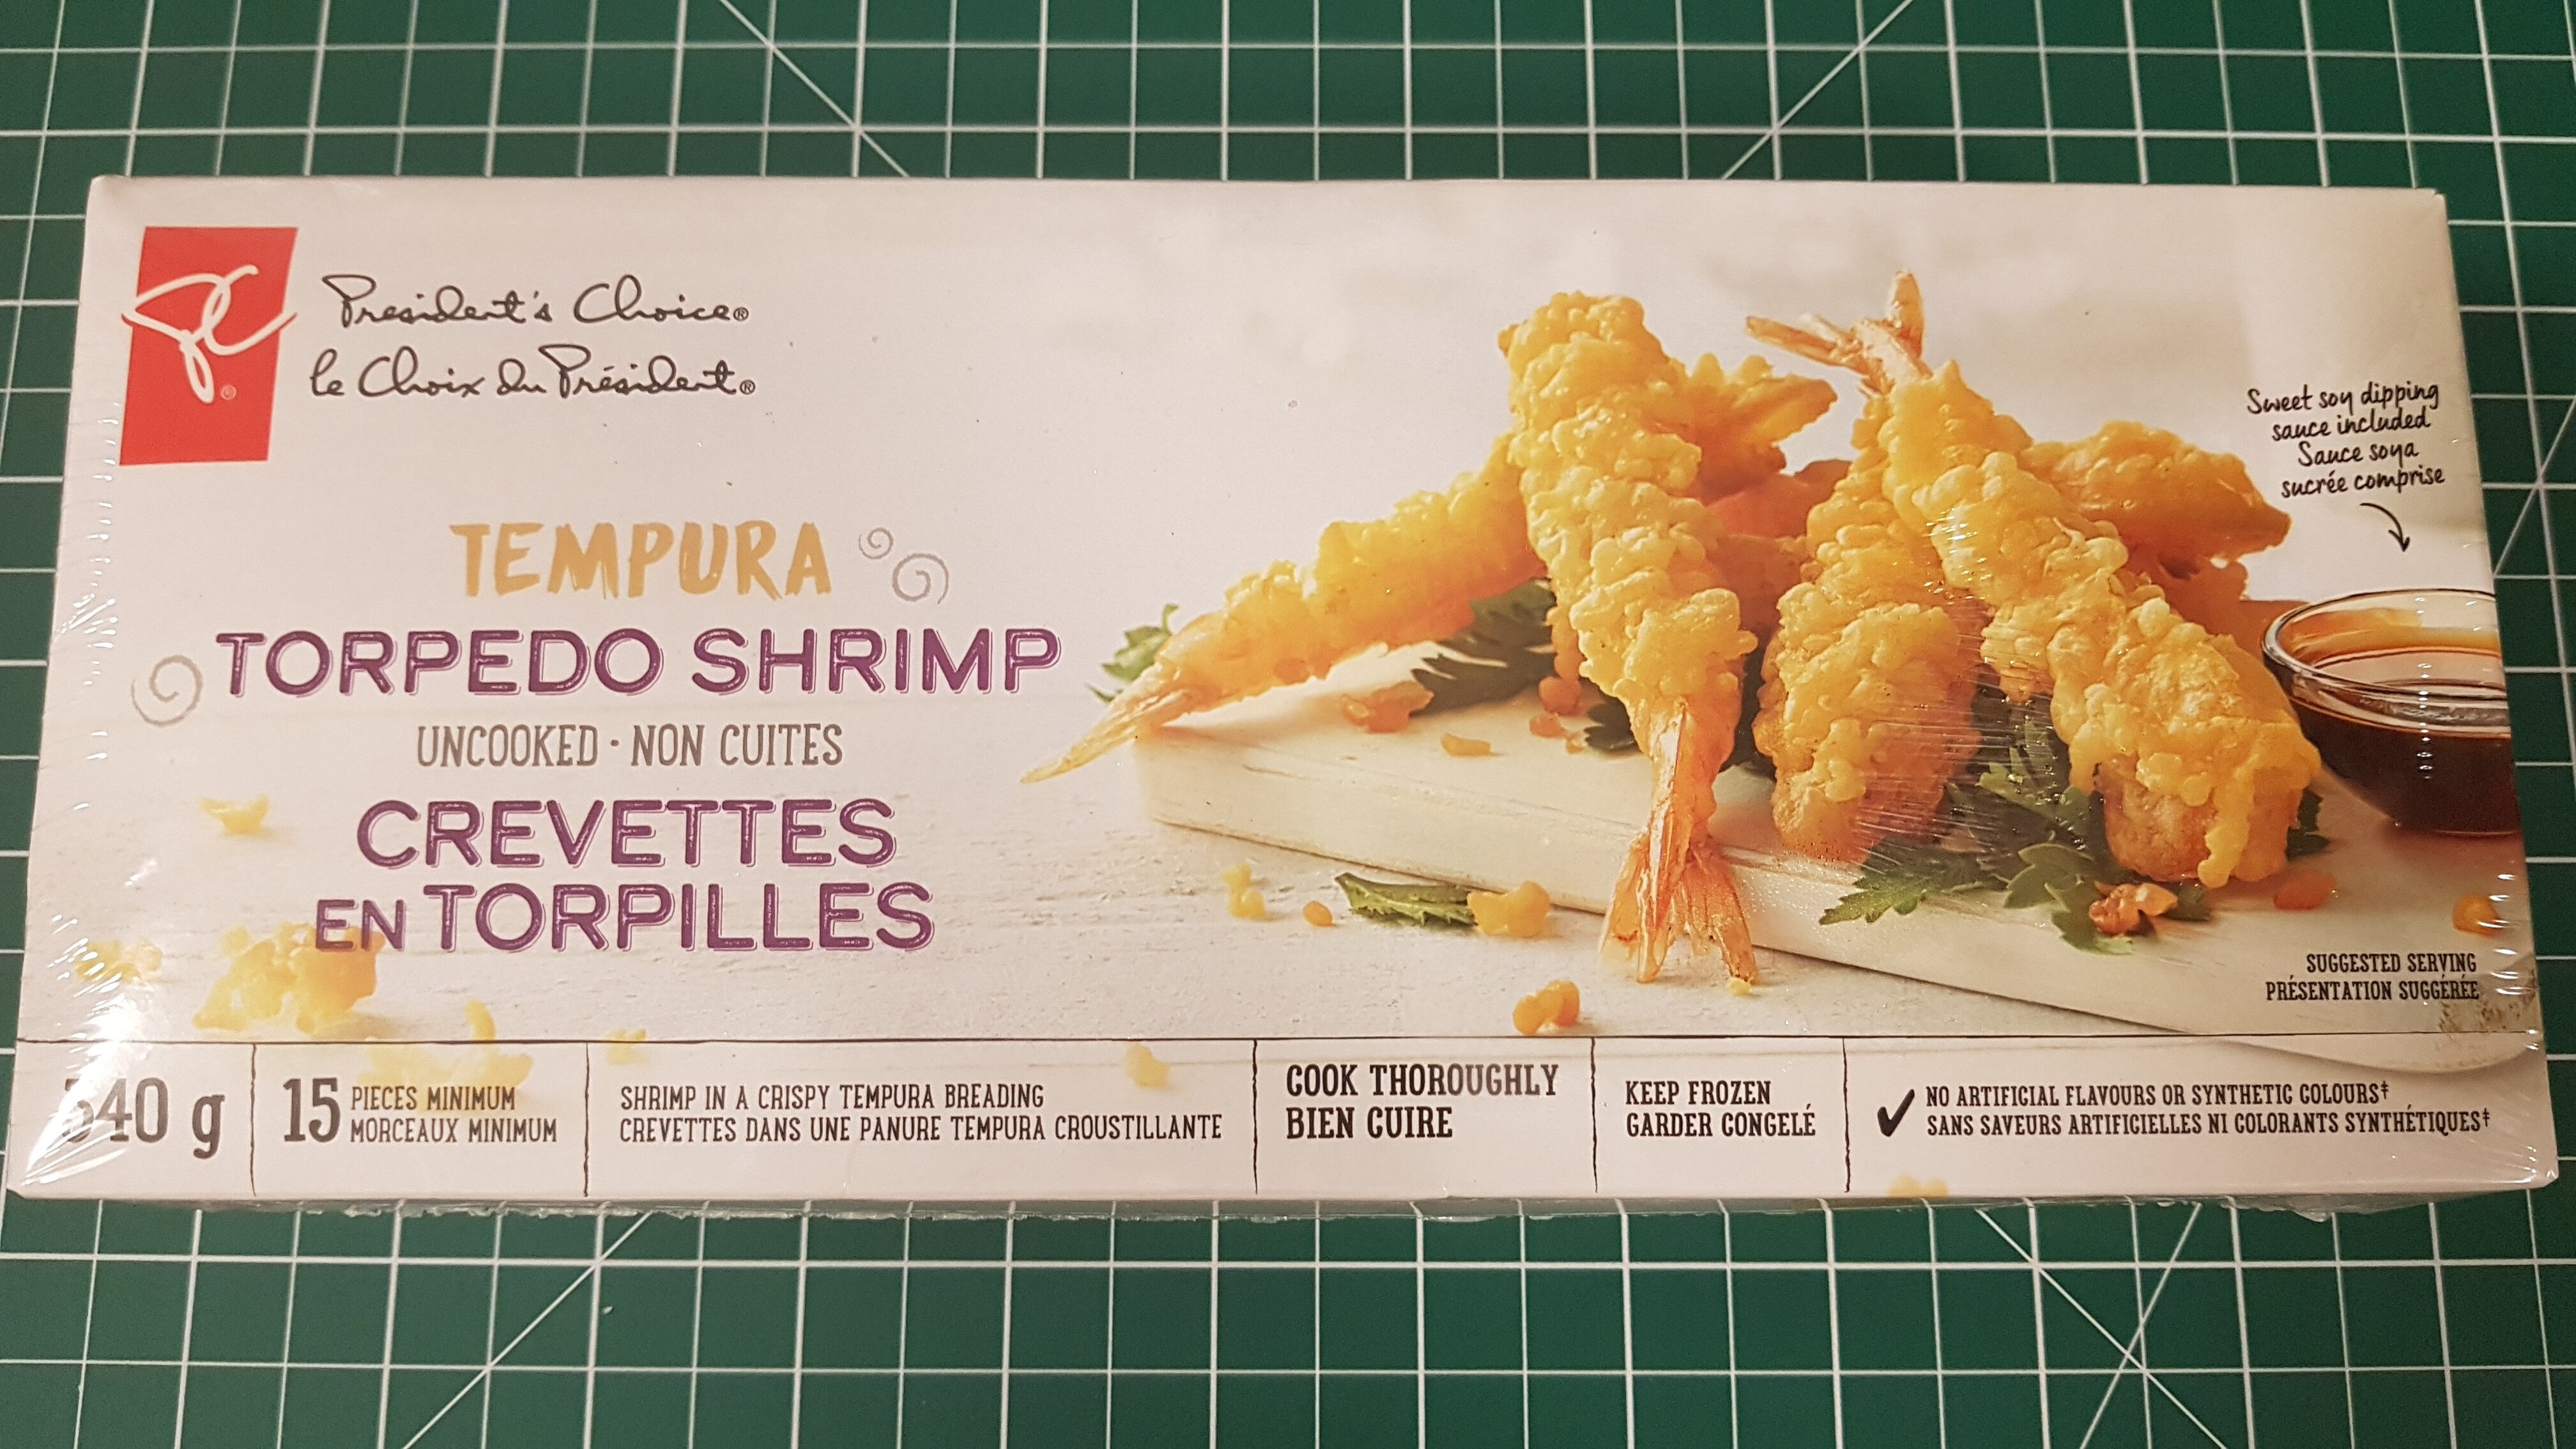 Tempura Torpedo Shrimp with Sweet Soy Dipping Sauce - Produit - en